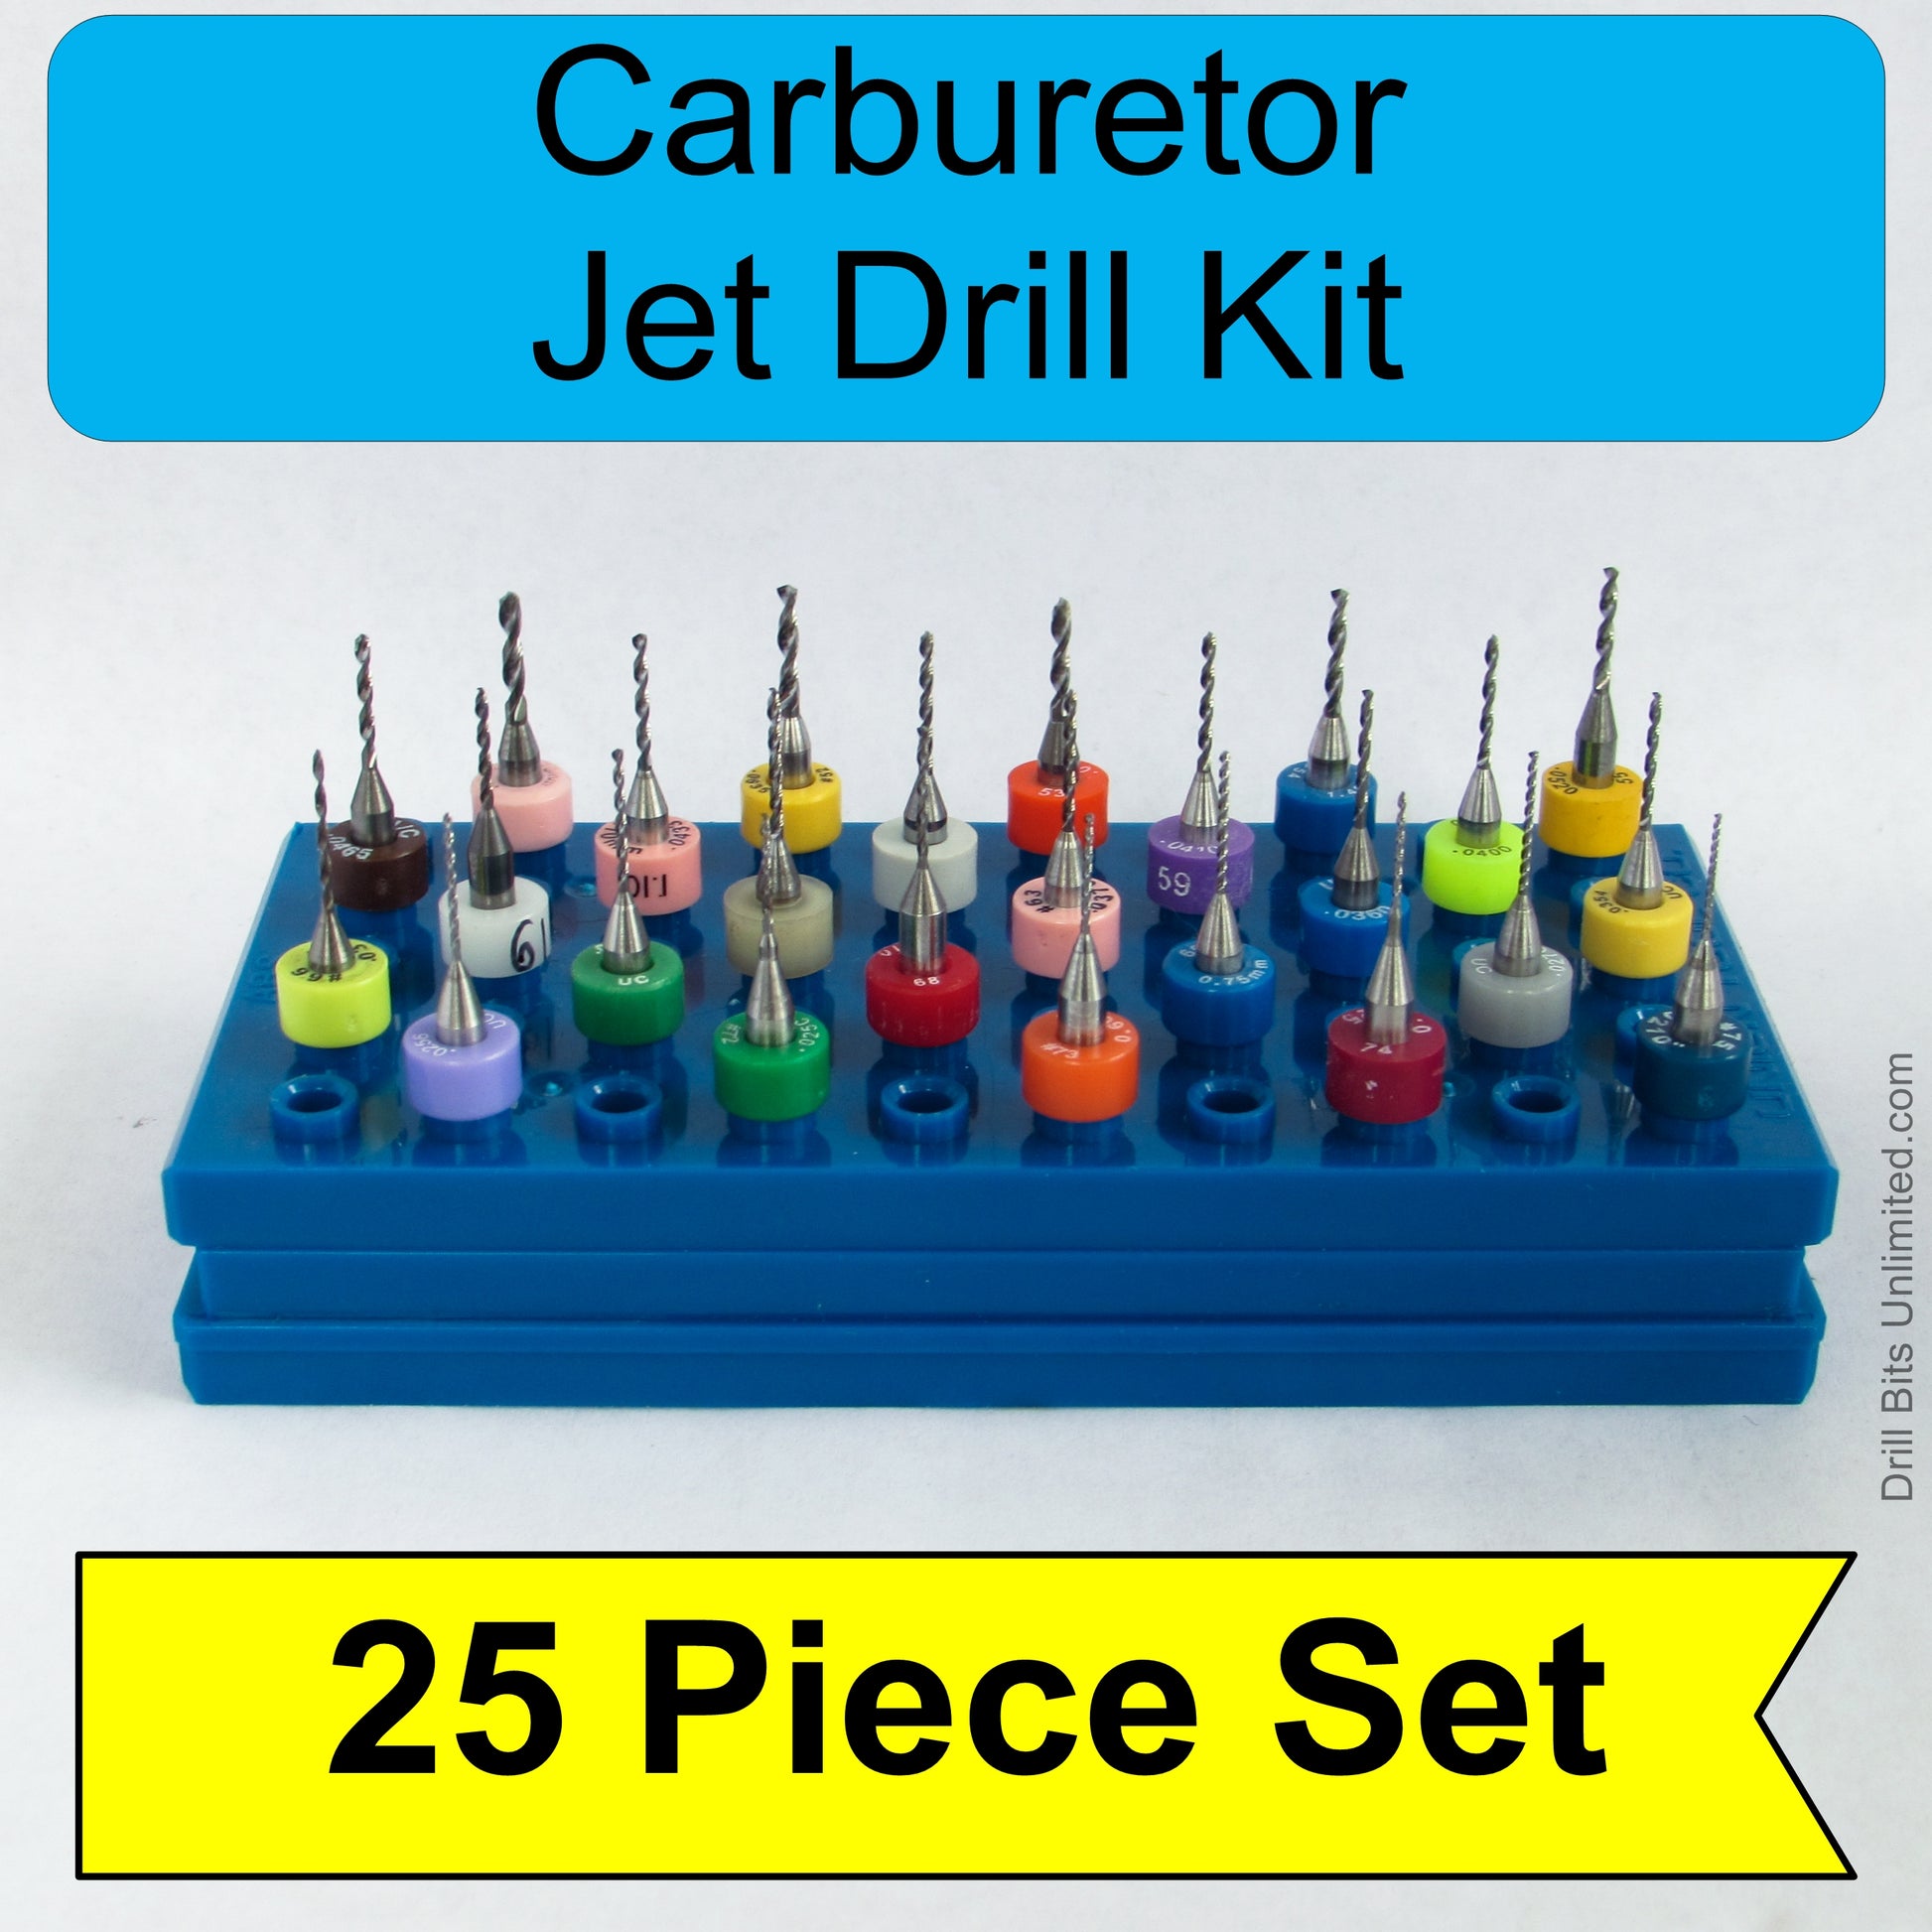 Carburetor Jet Drill Set Kit 25 Piece